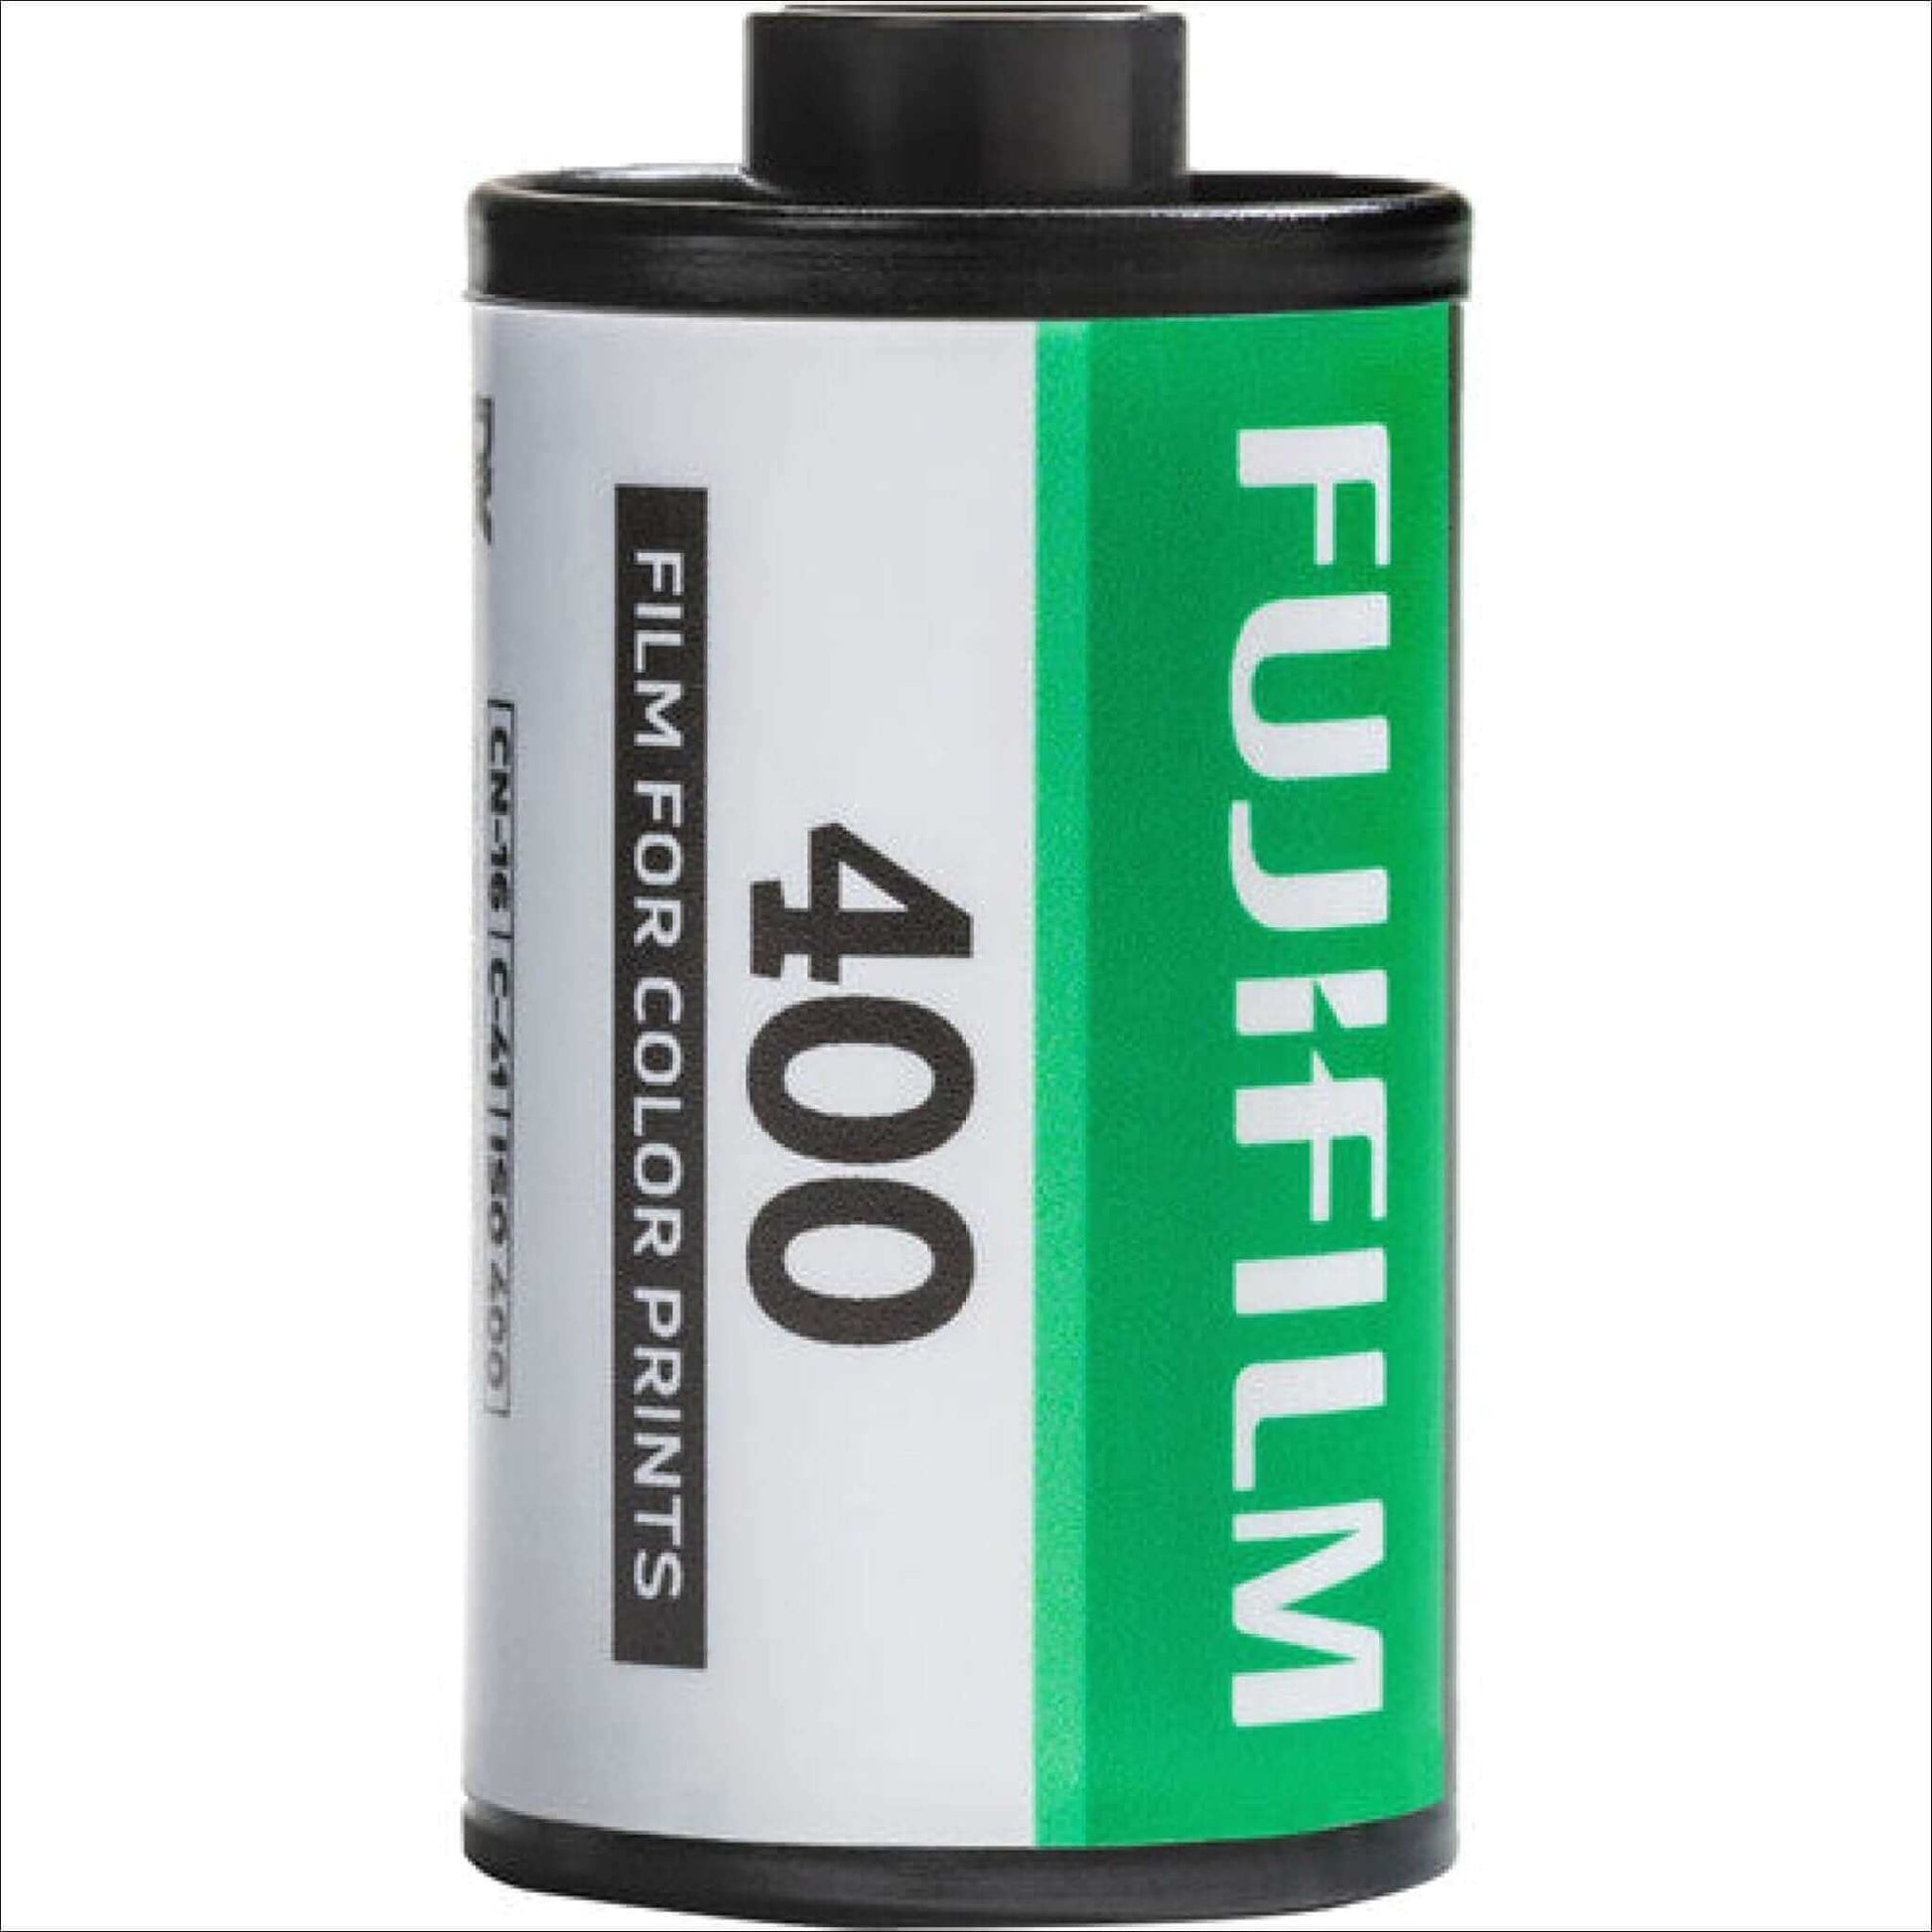 Fujifilm 400 Iso Color C41 35mm 36 Exp